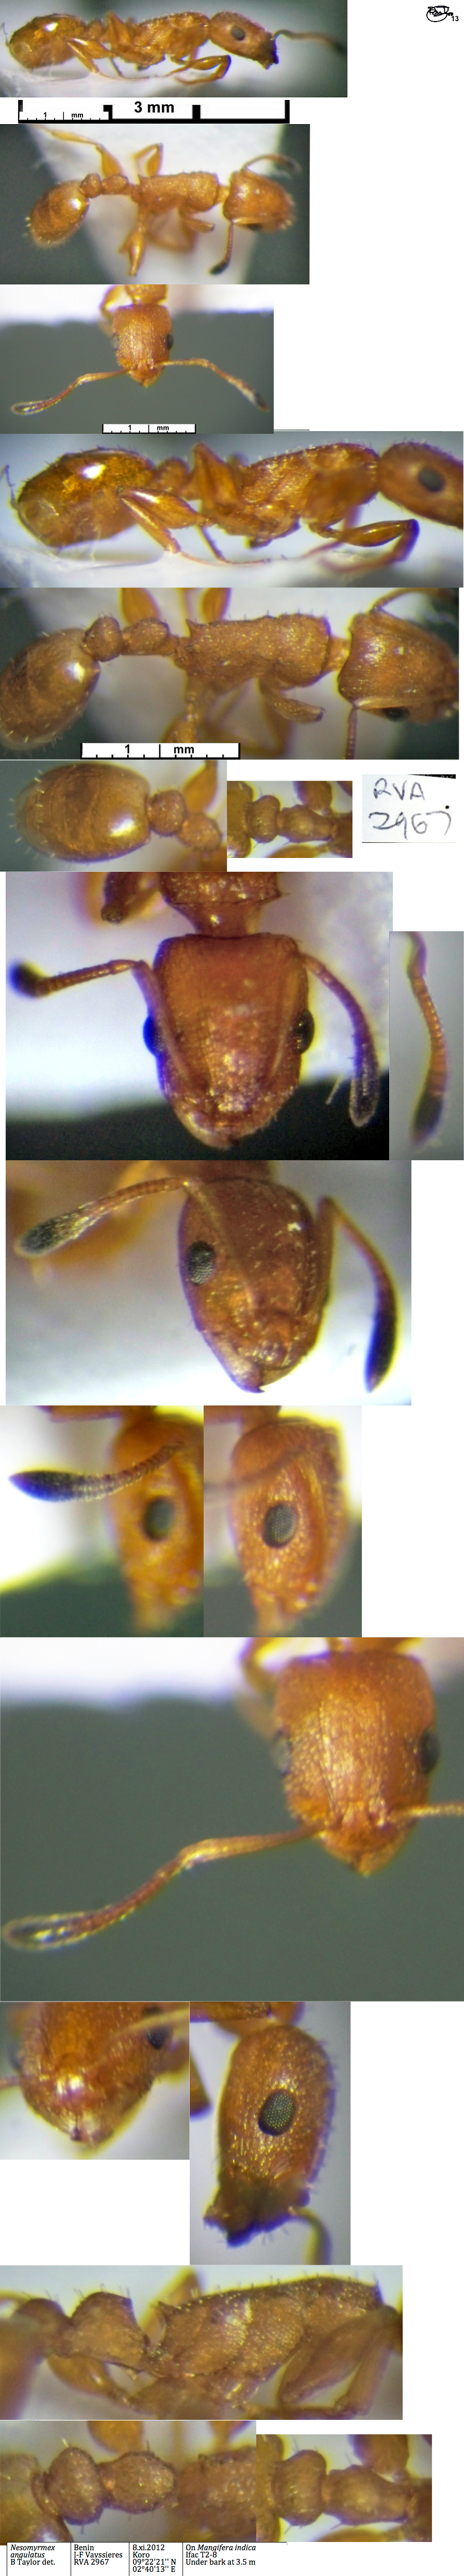 Nesomyrmex angulatus